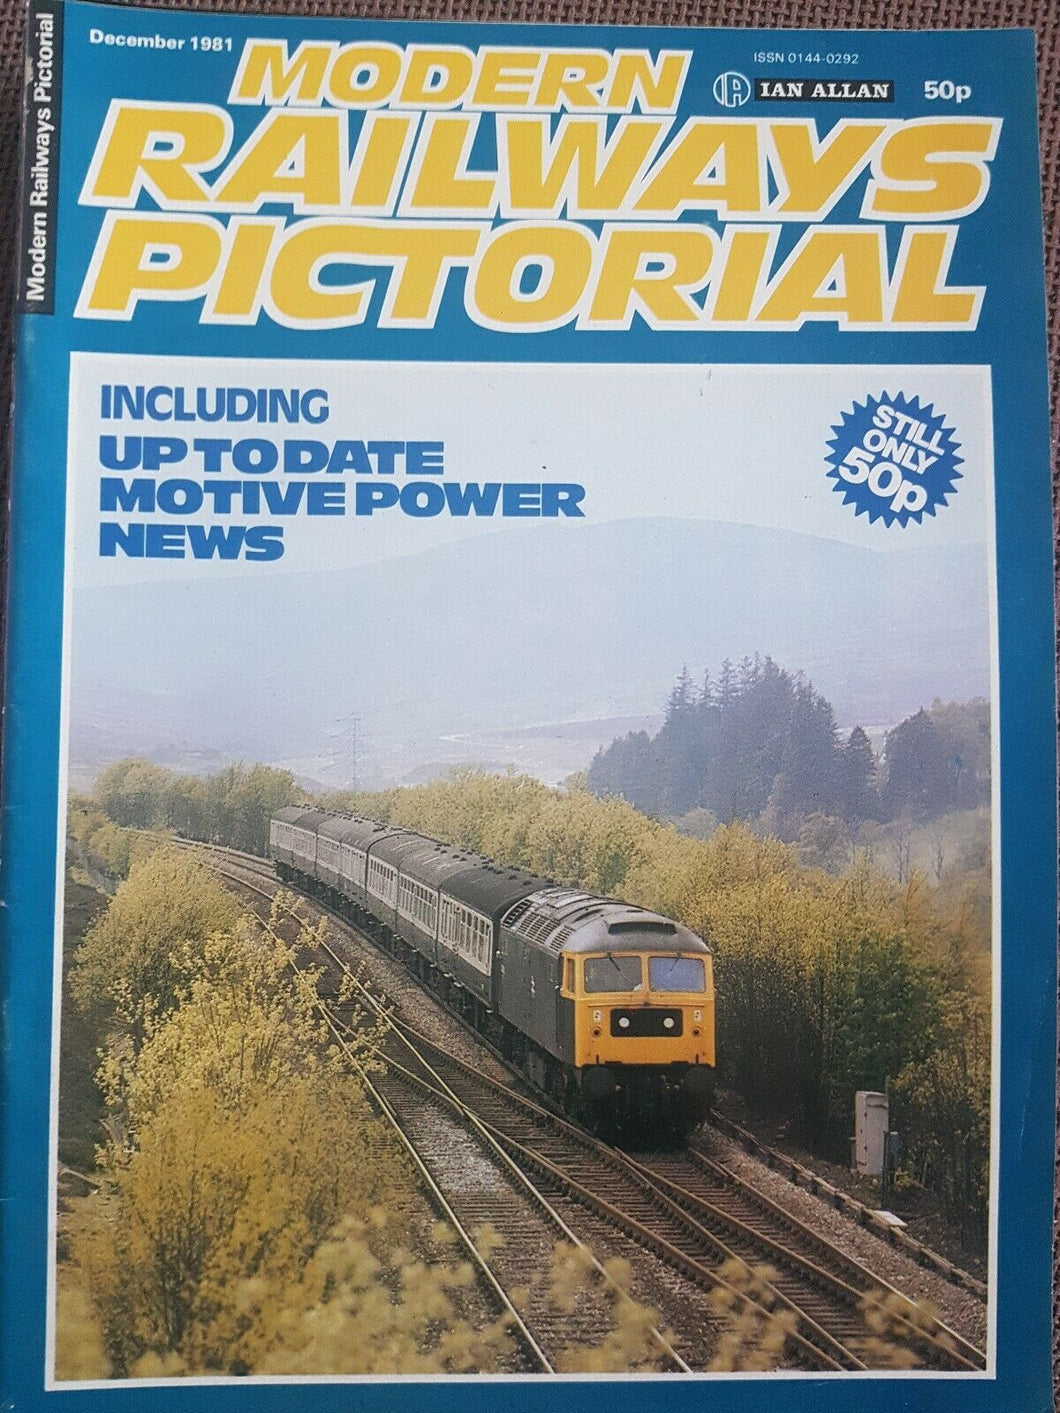 MODERN RAILWAYS PICTORIAL Magazine. IAN ALLAN. DECEMBER 1981